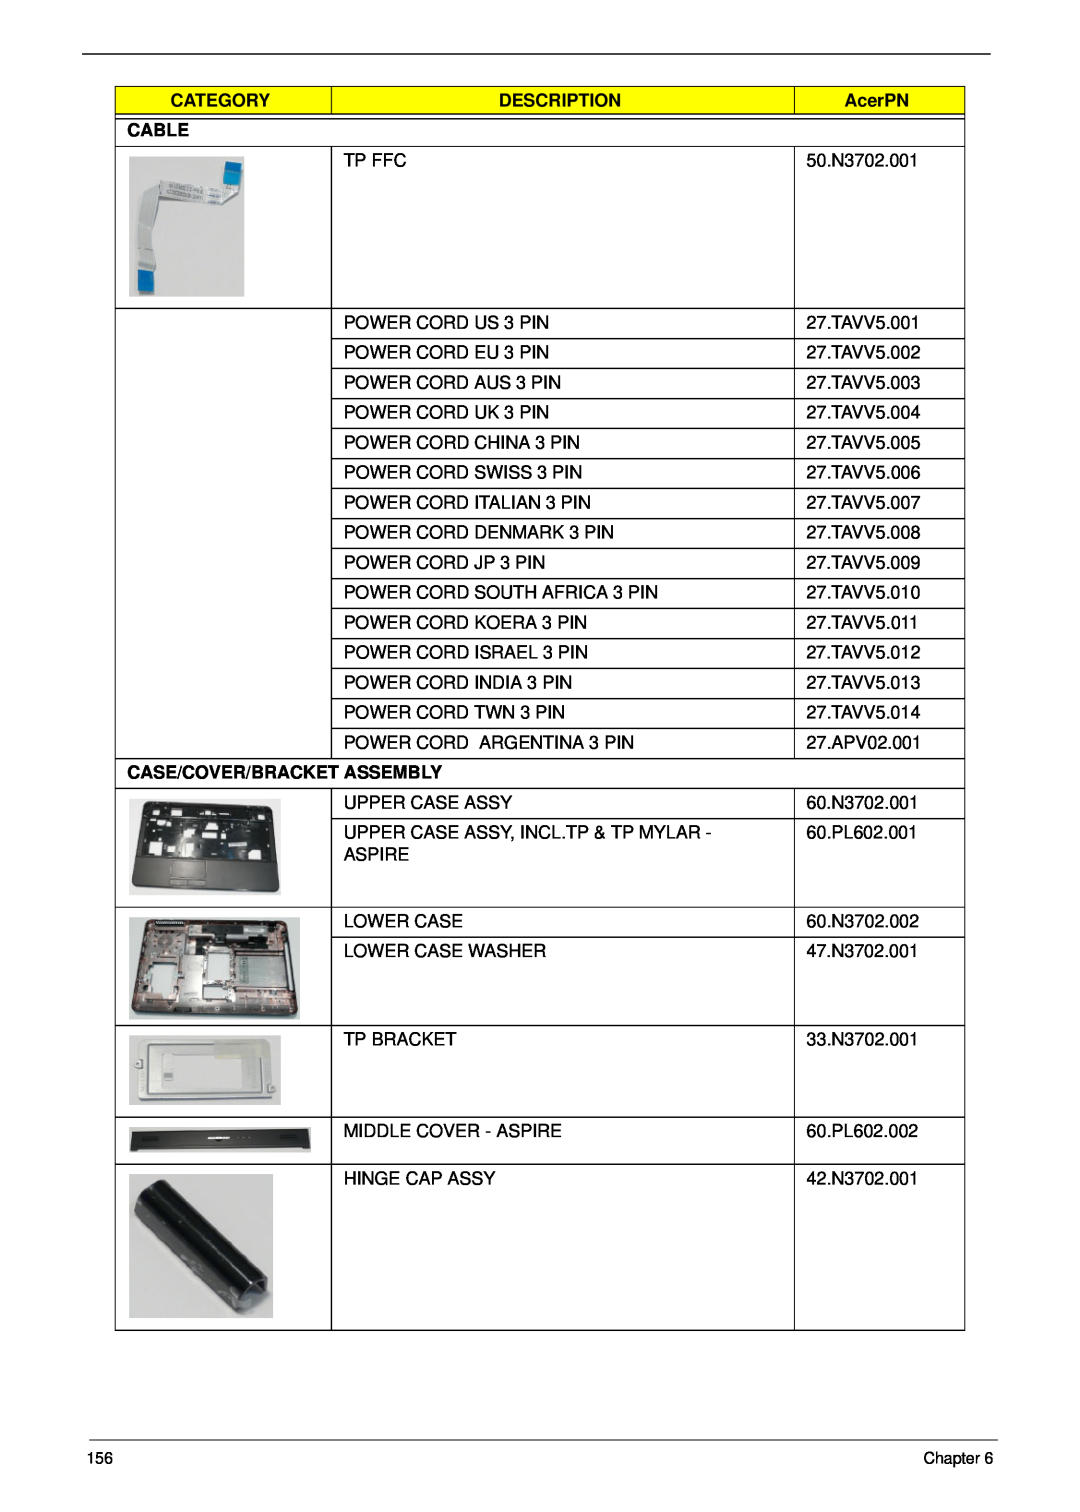 Acer 7715Z, 7315 manual Category, Description, AcerPN, Cable, Case/Cover/Bracket Assembly 